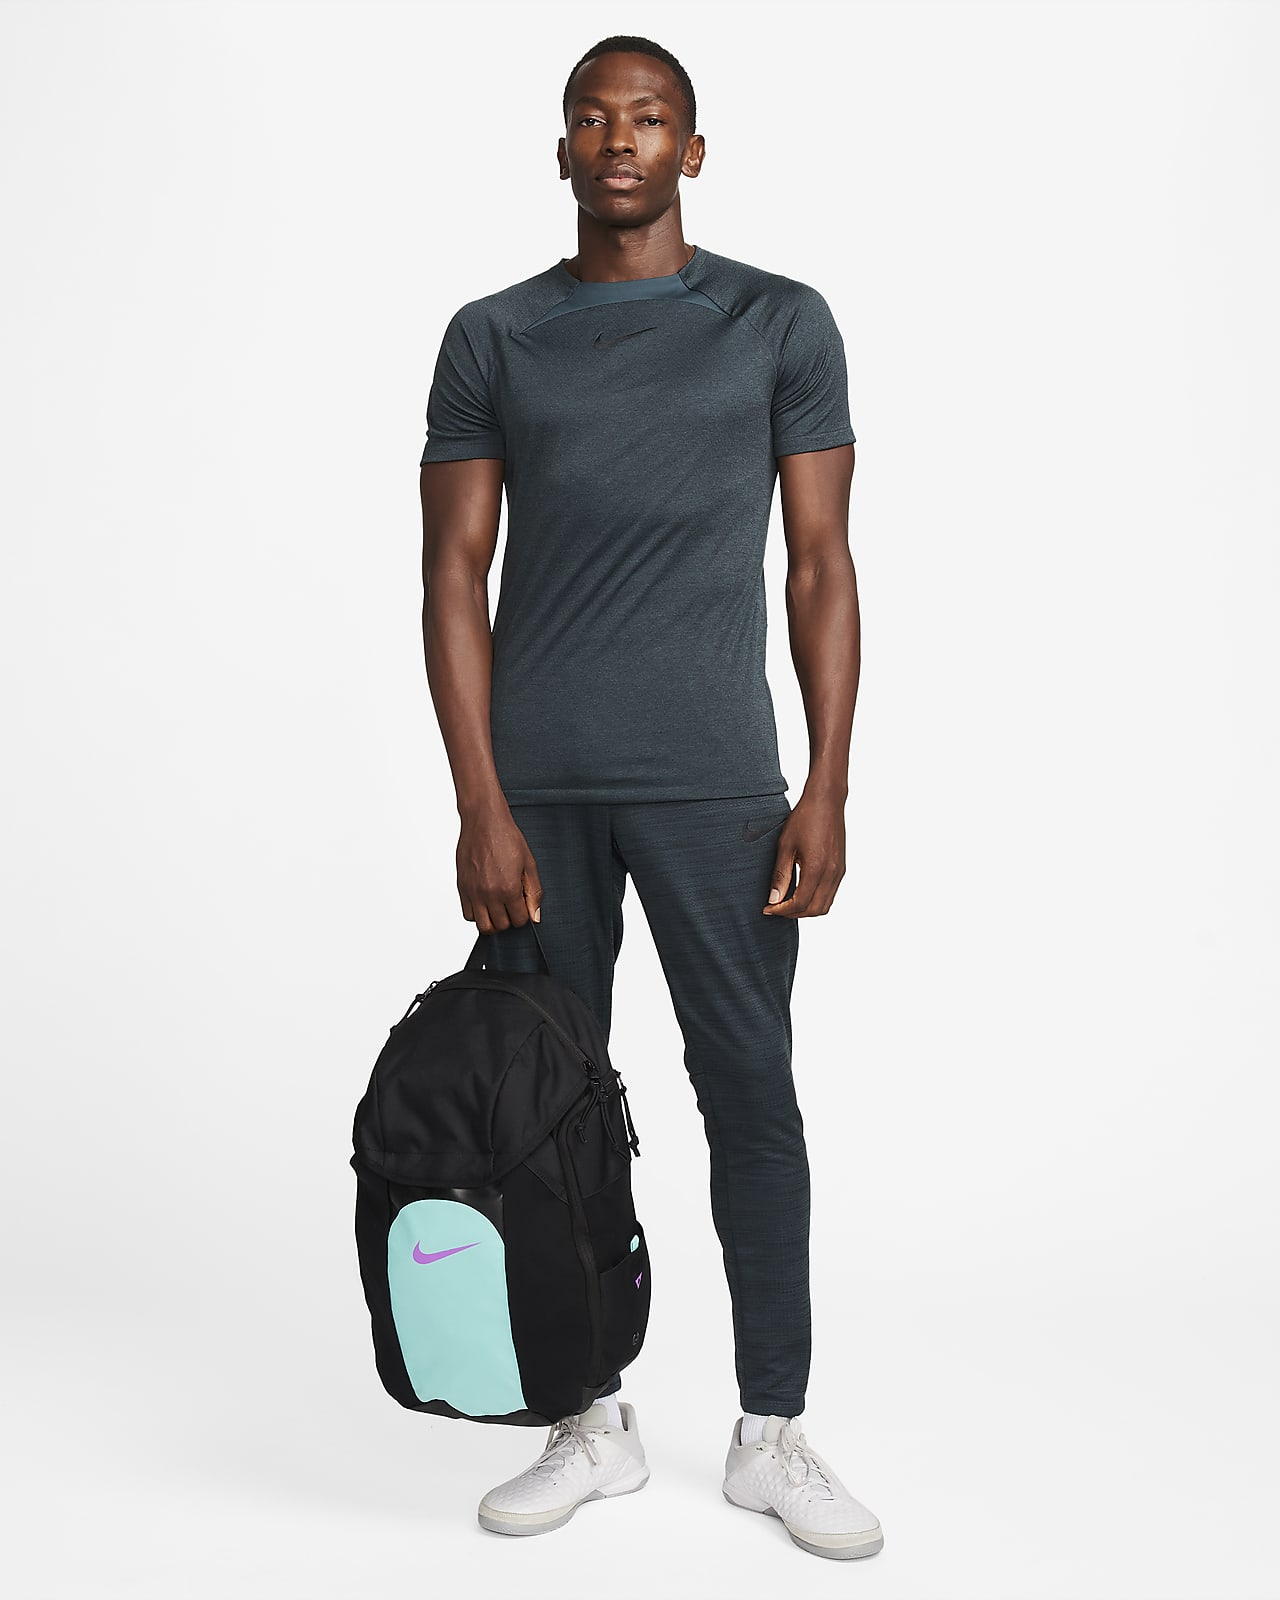 Nike Academy Travel Backpack (Grey)